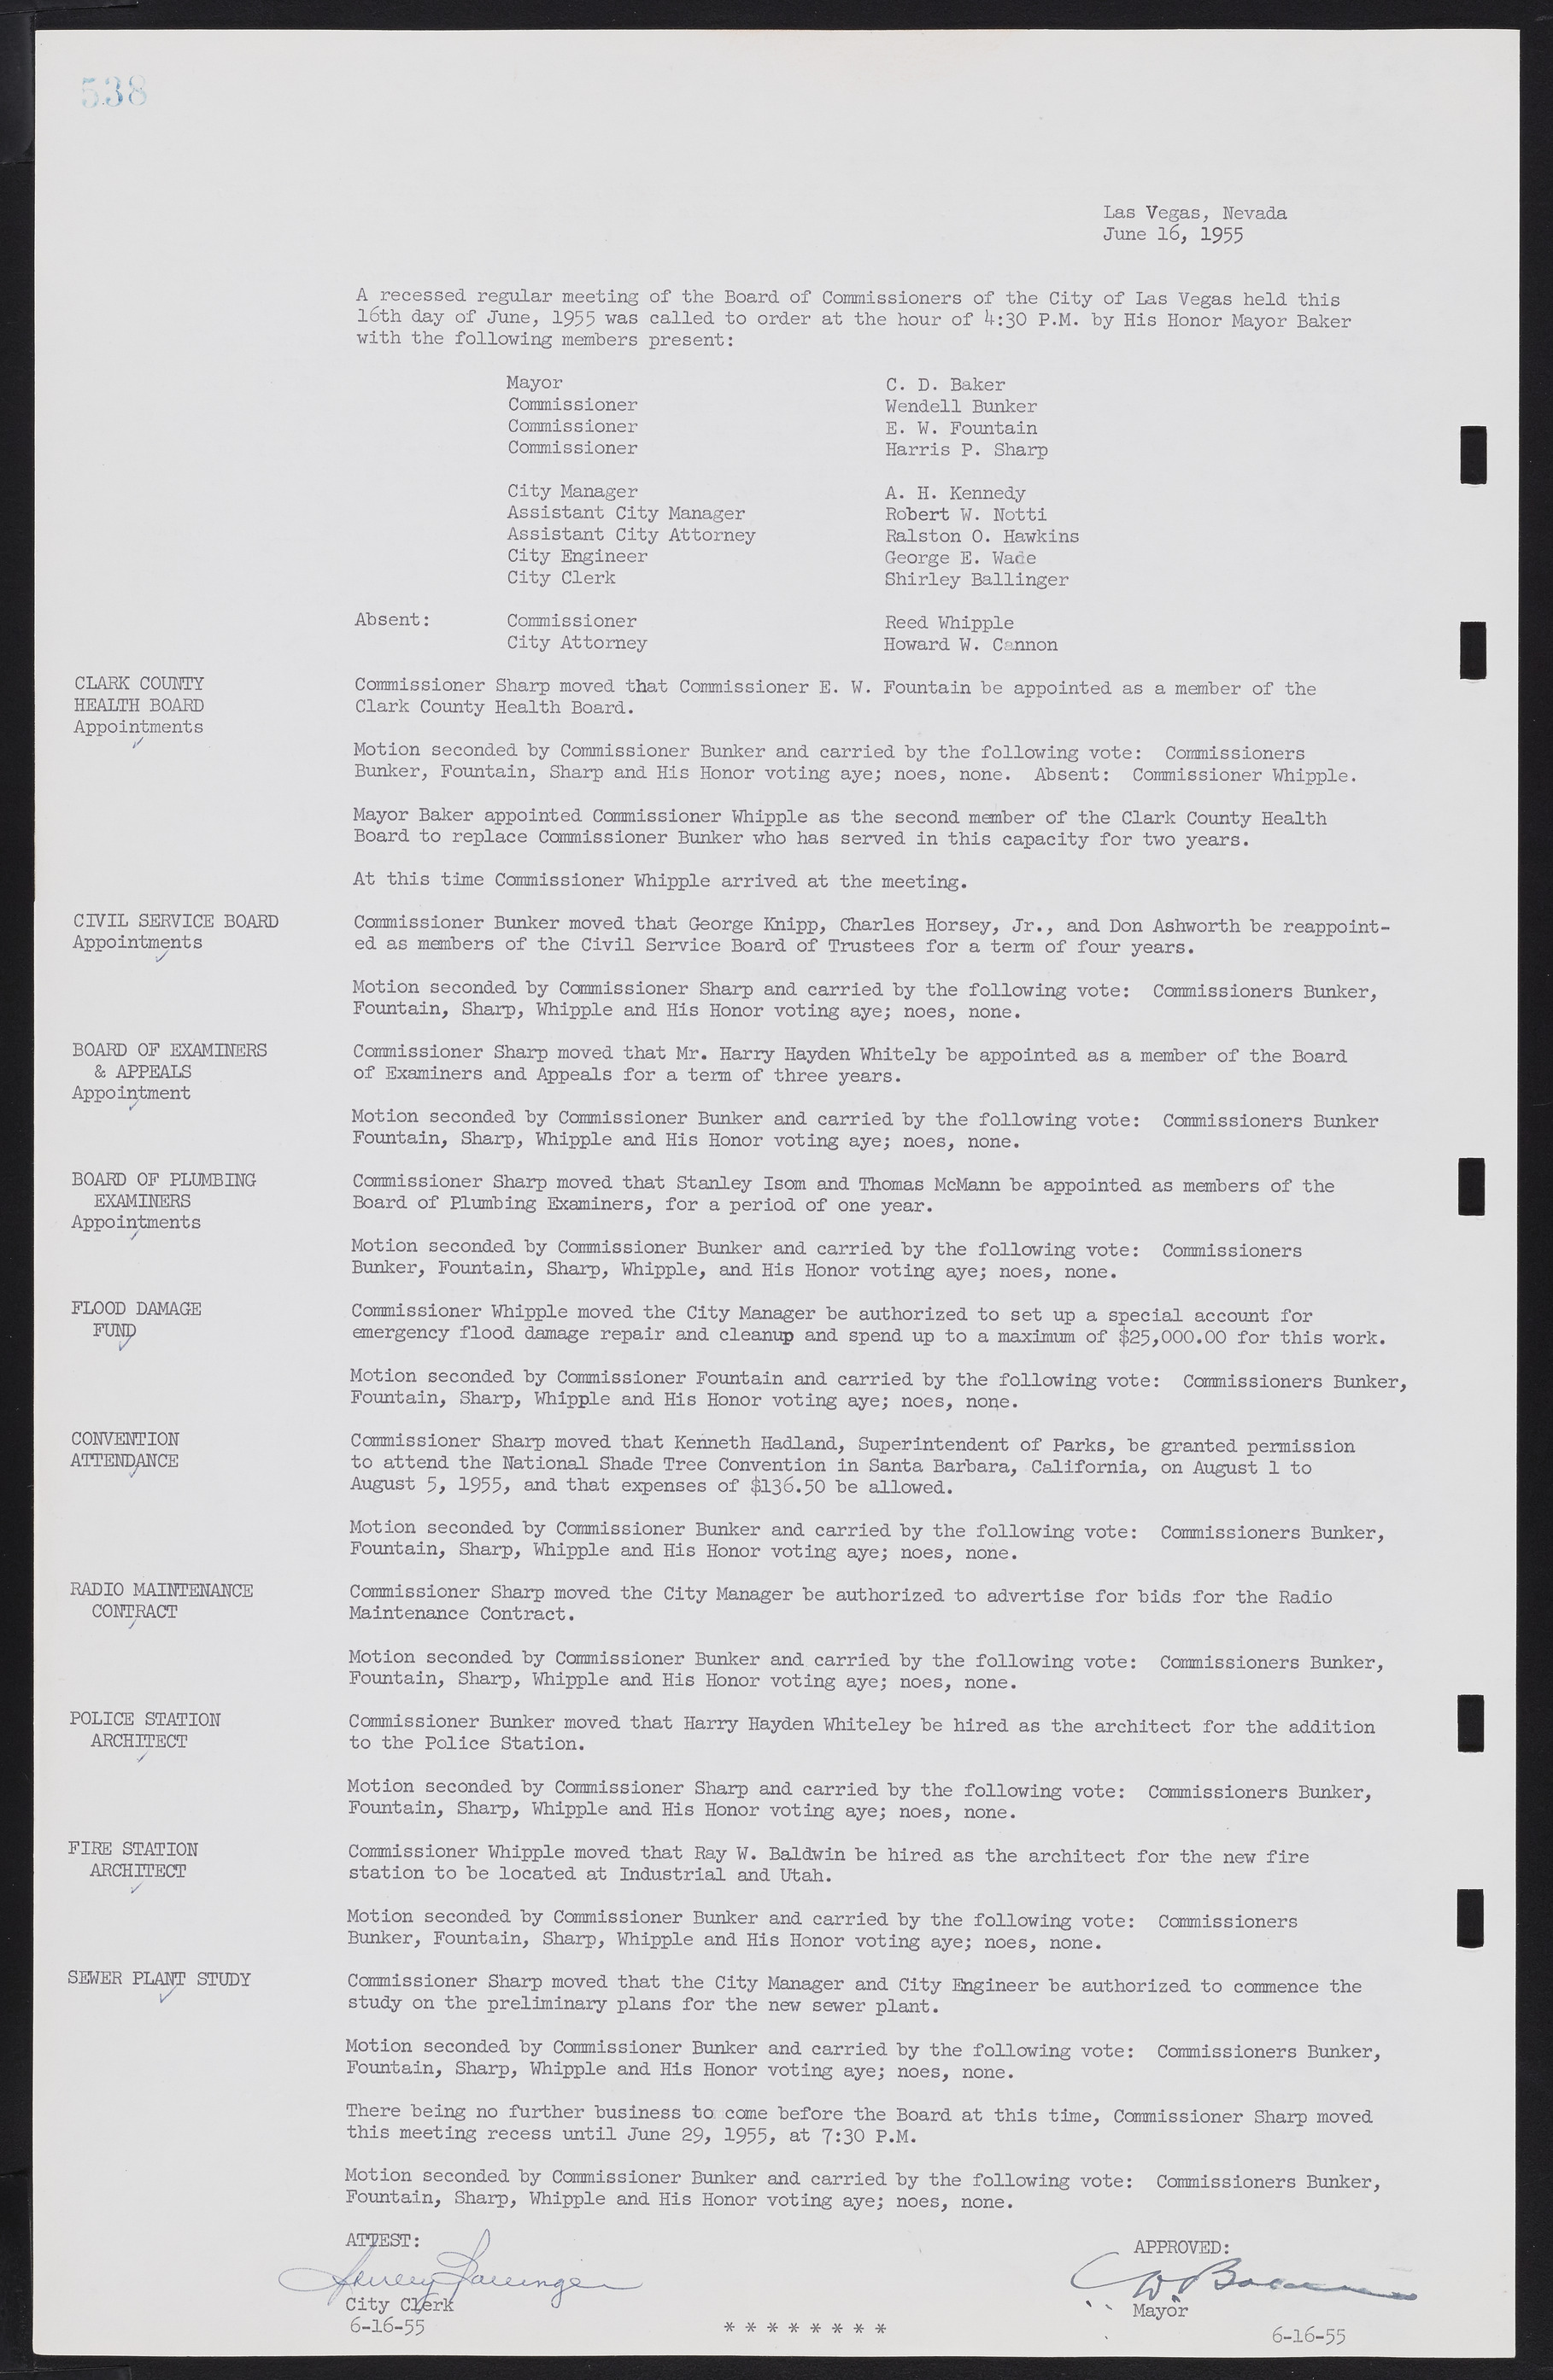 Las Vegas City Commission Minutes, February 17, 1954 to September 21, 1955, lvc000009-544